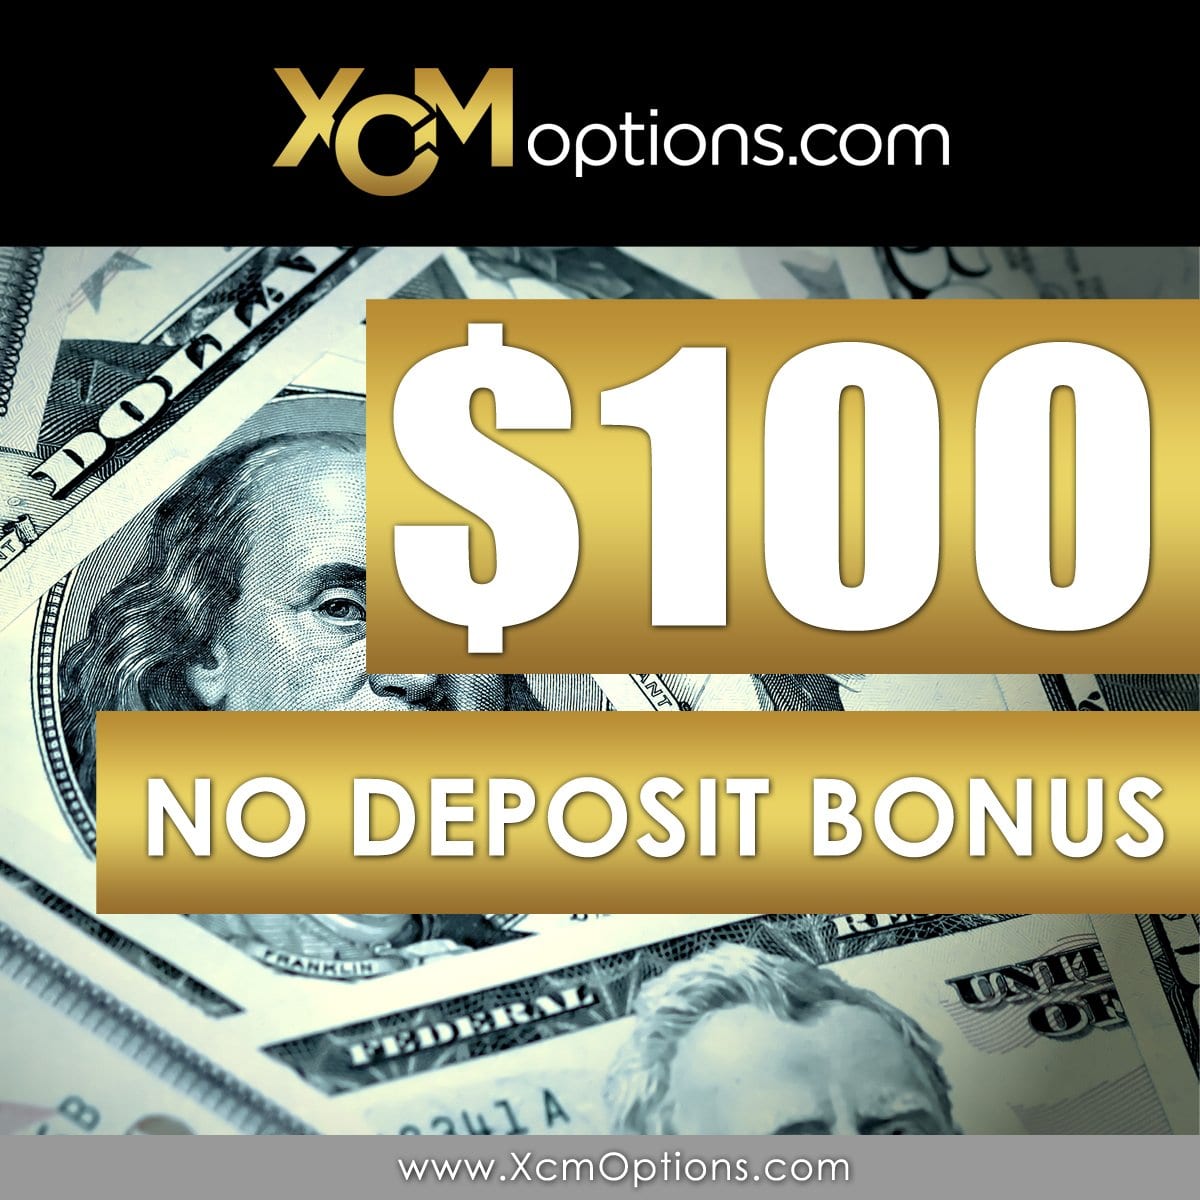 No deposit binary options bonuses